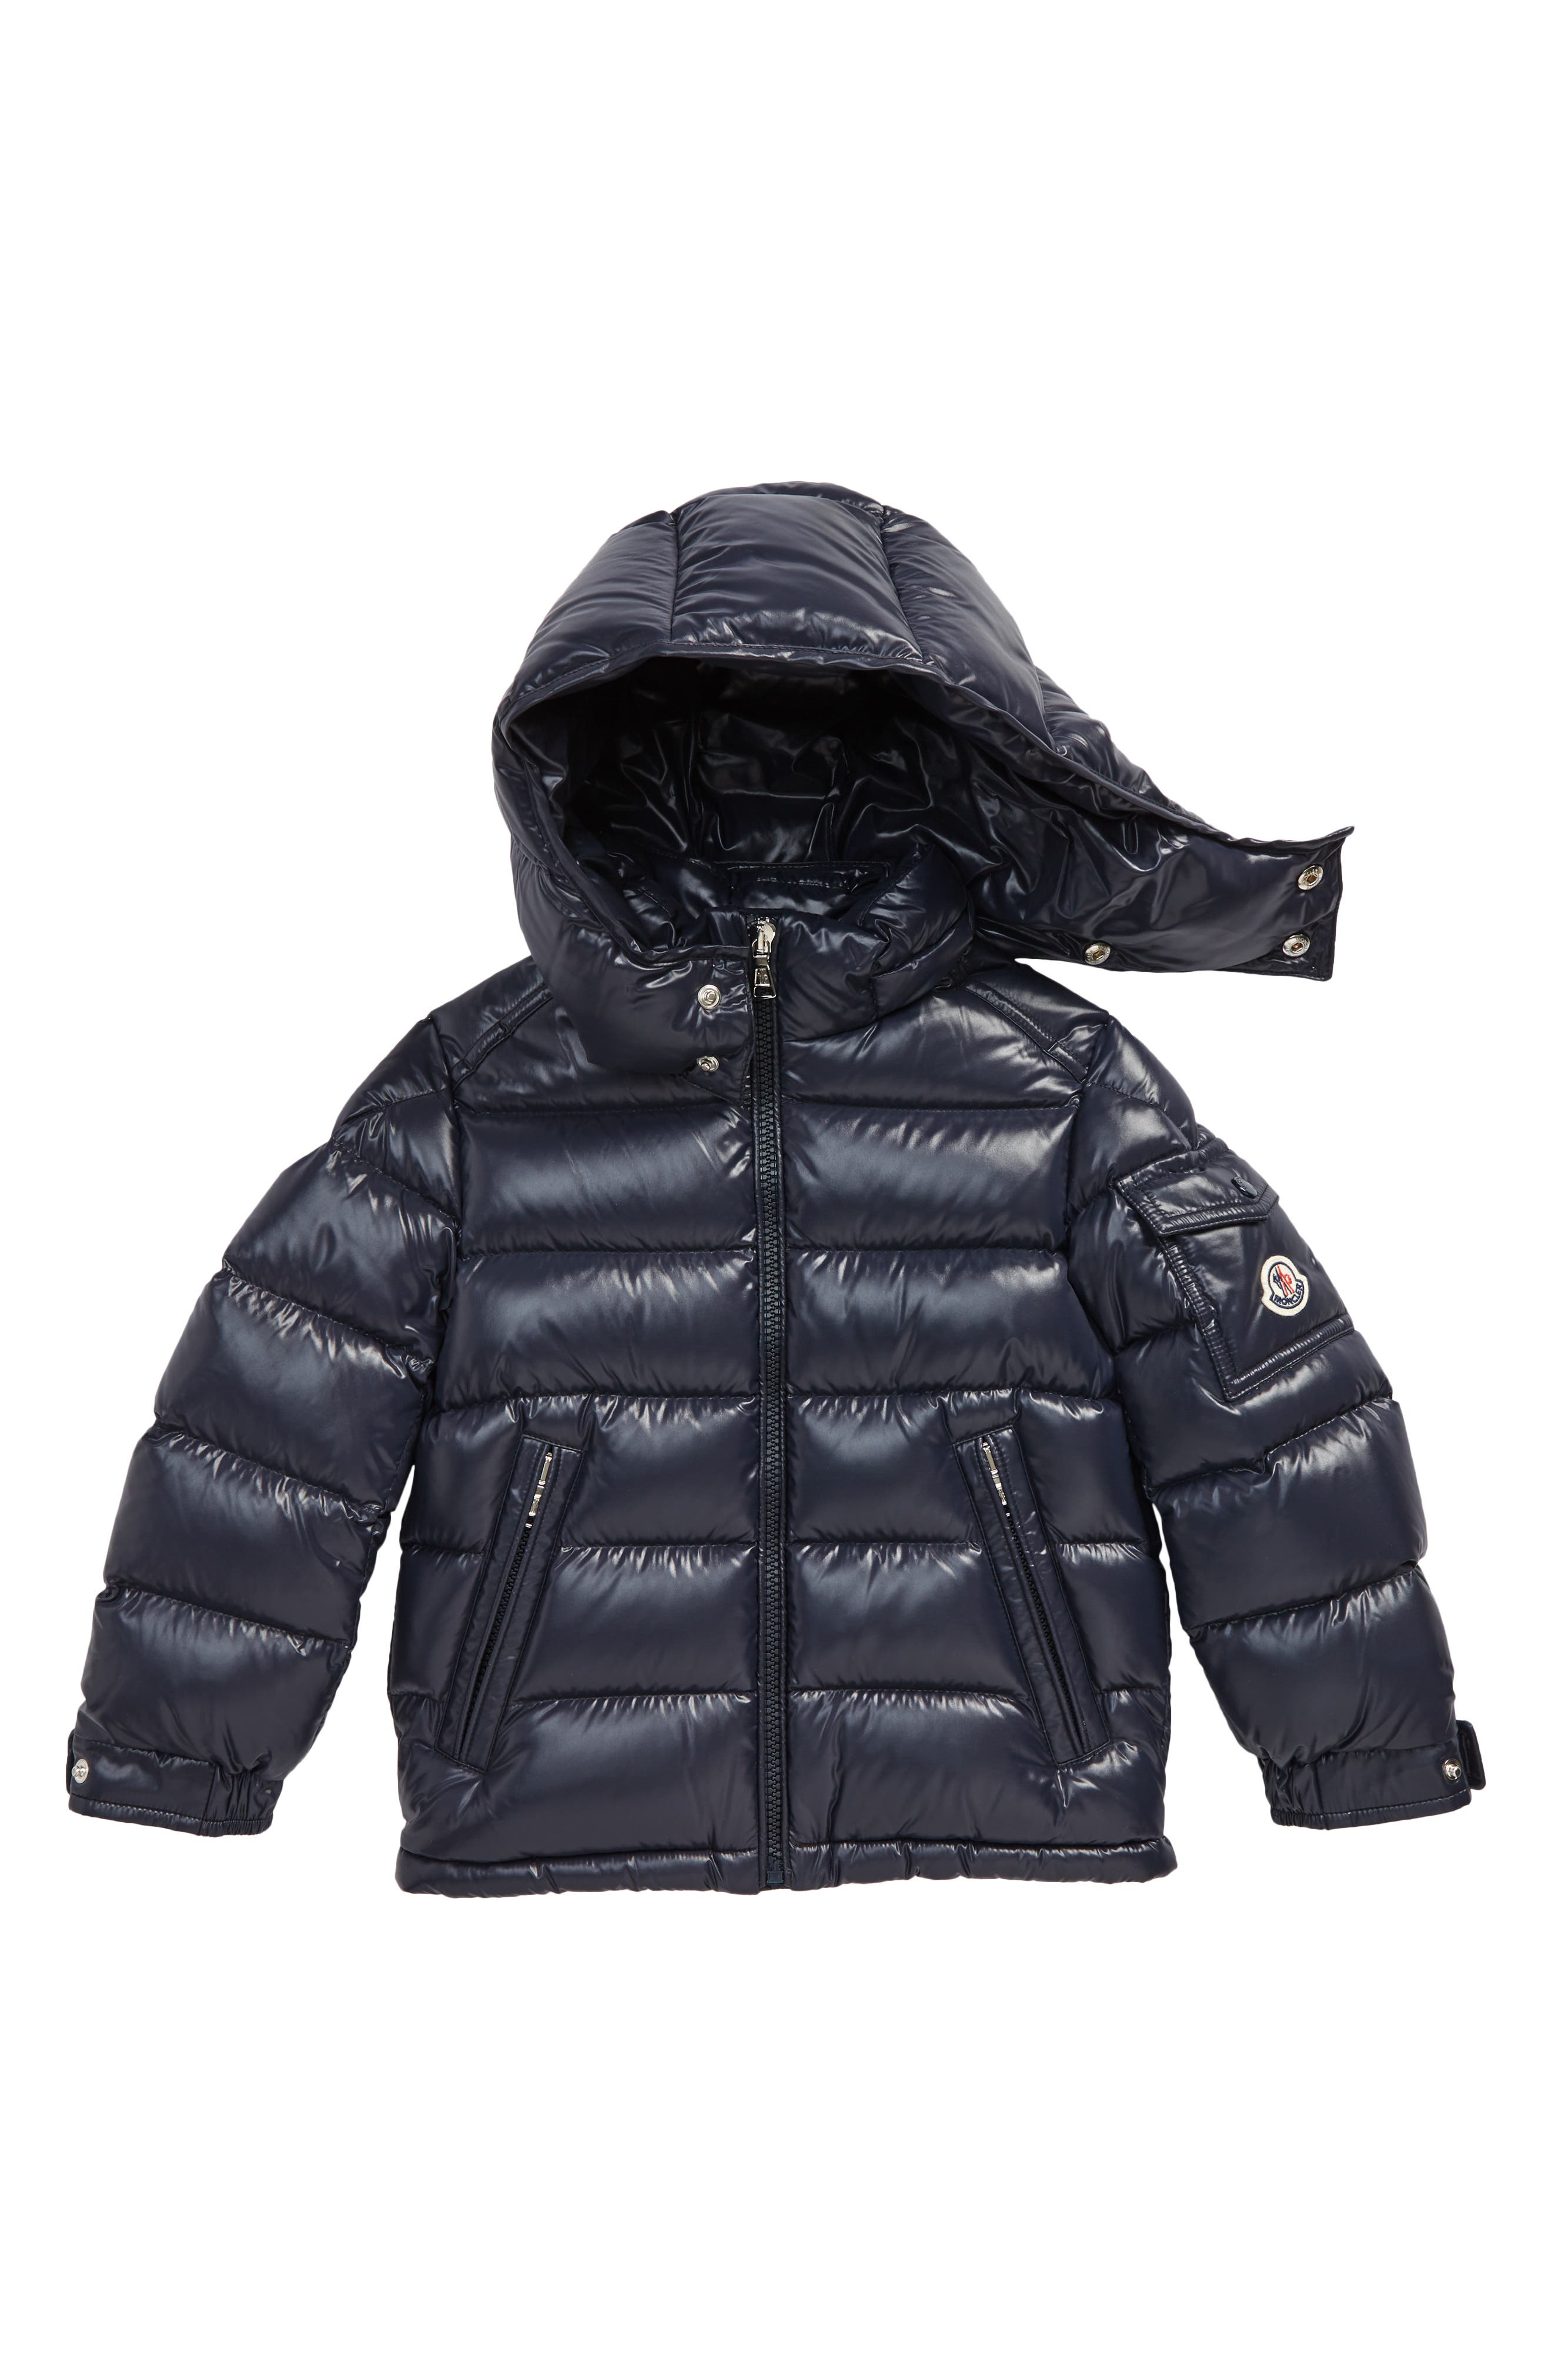 GETUBACK Kids Down Coat Warm Puffer Jacket with Hood 